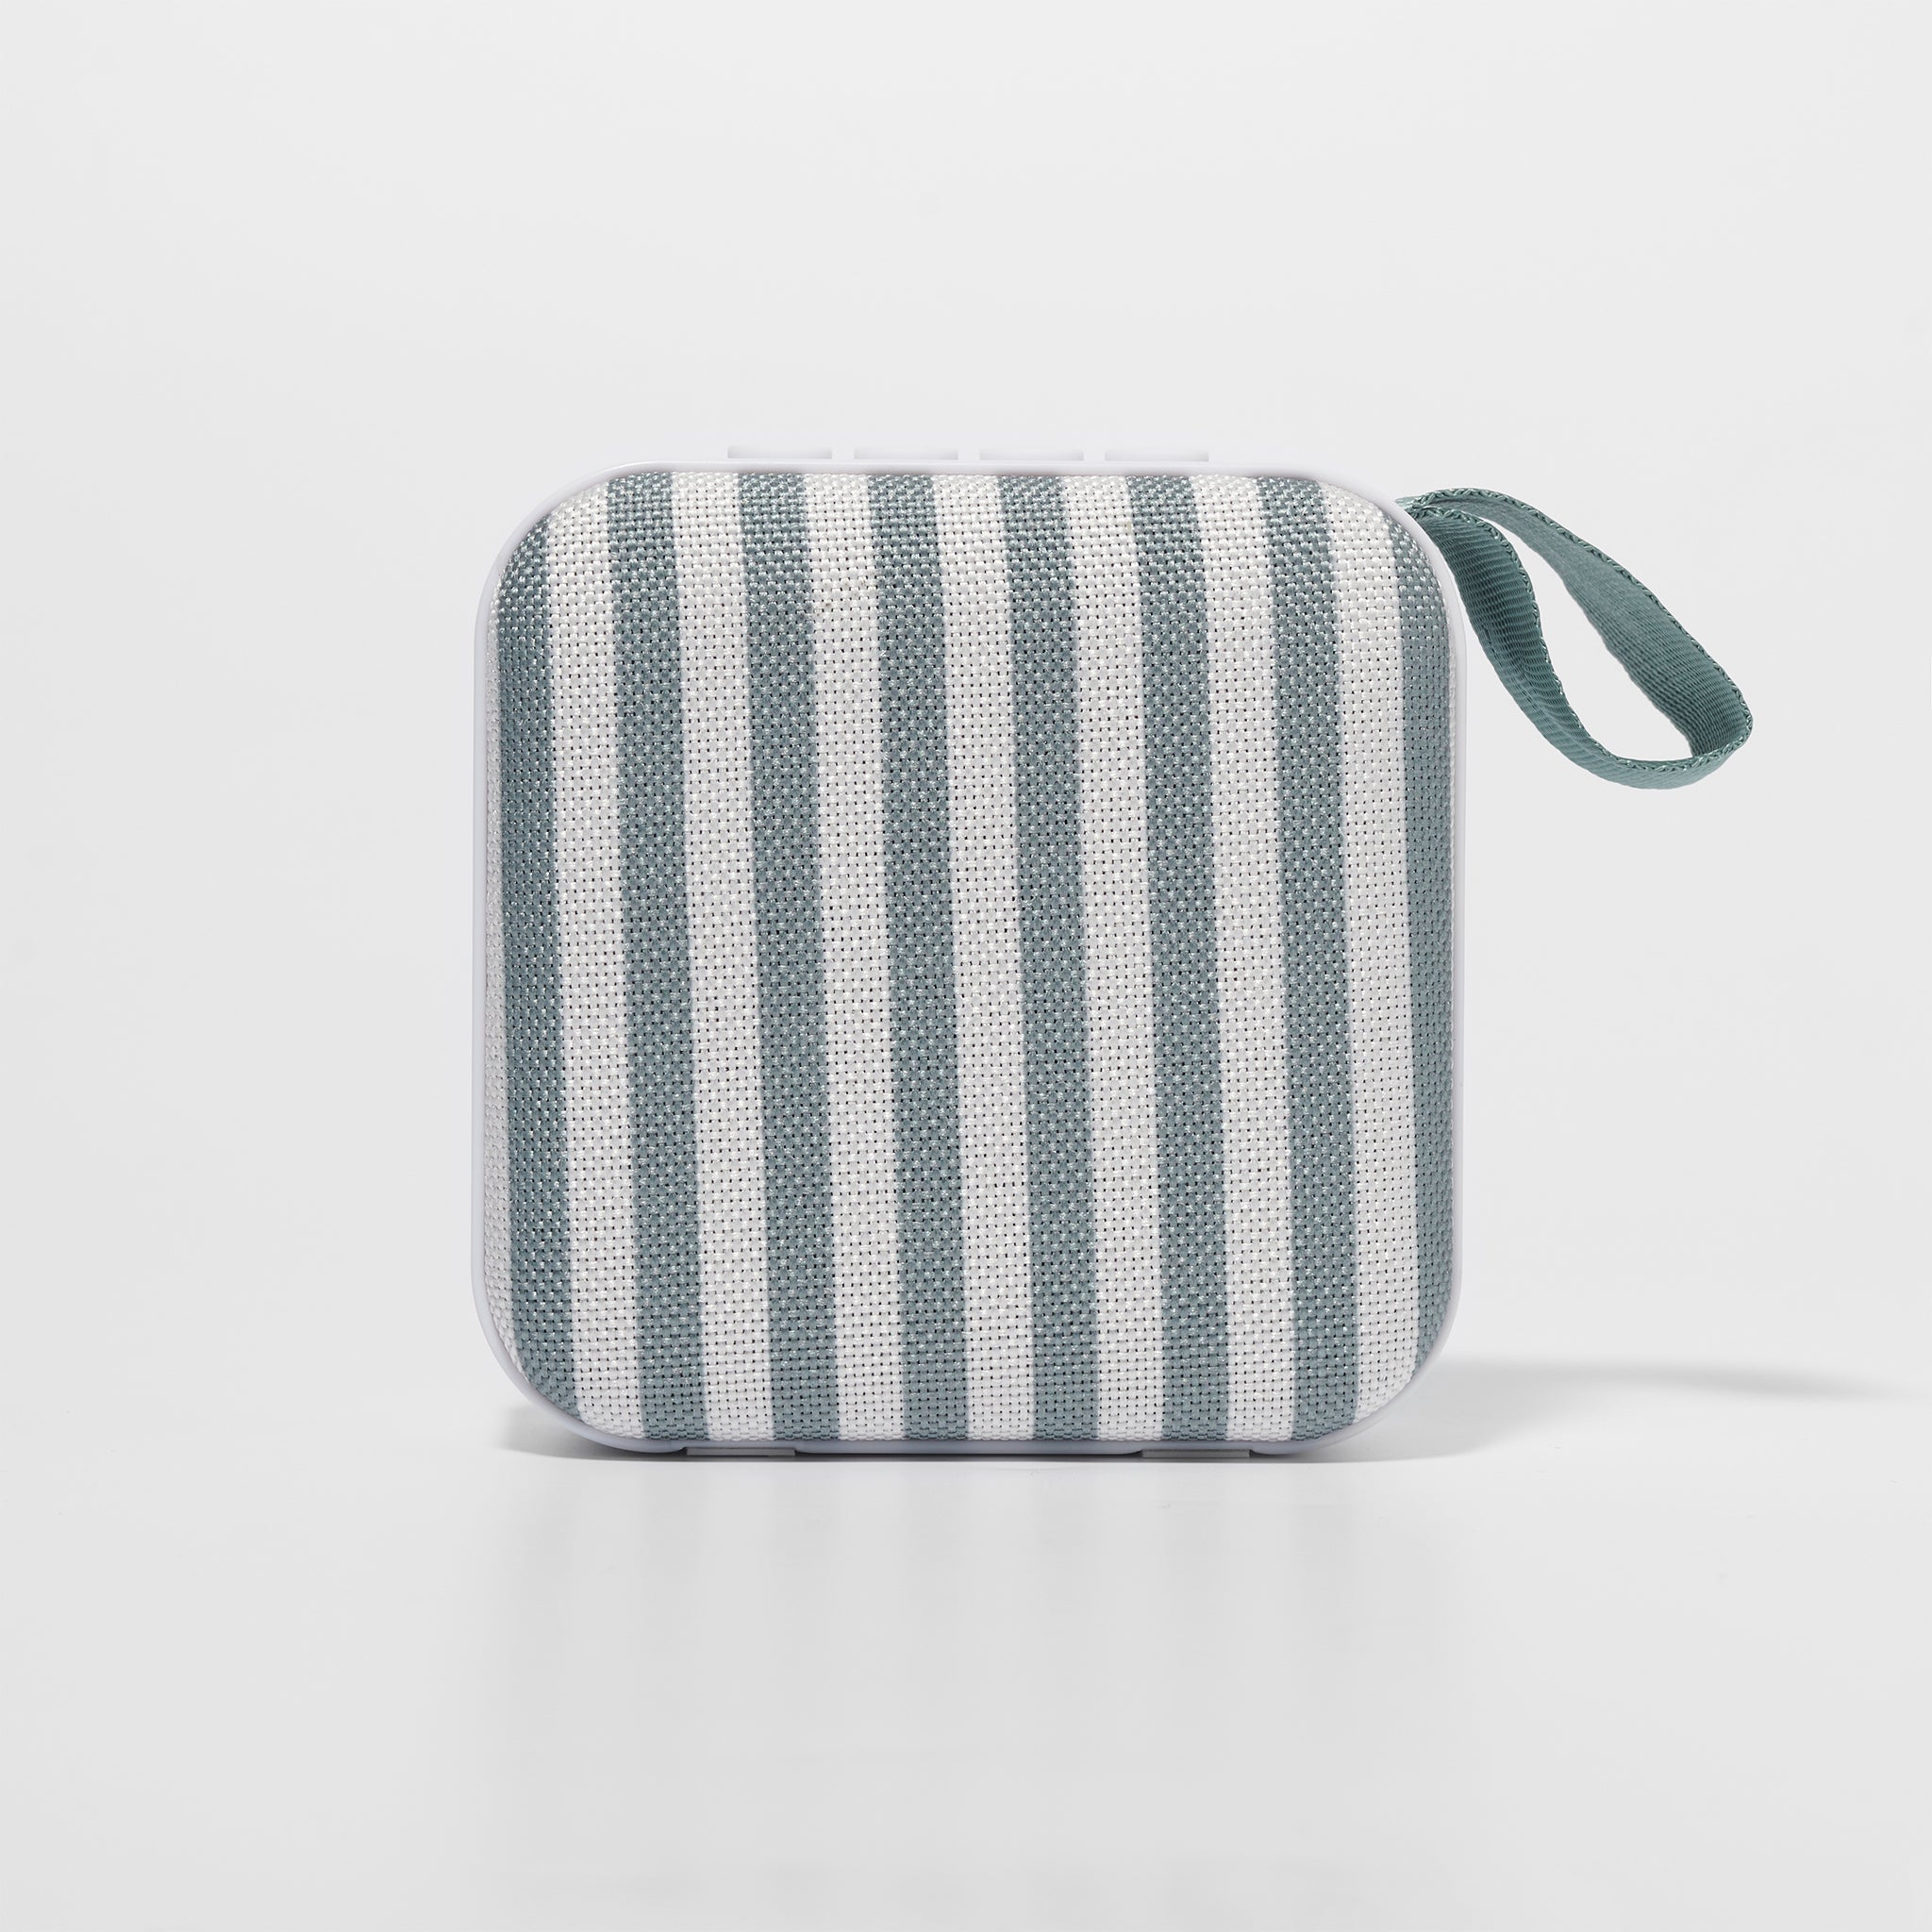 Portable Travel Speaker | The Vacay Olive Stripe